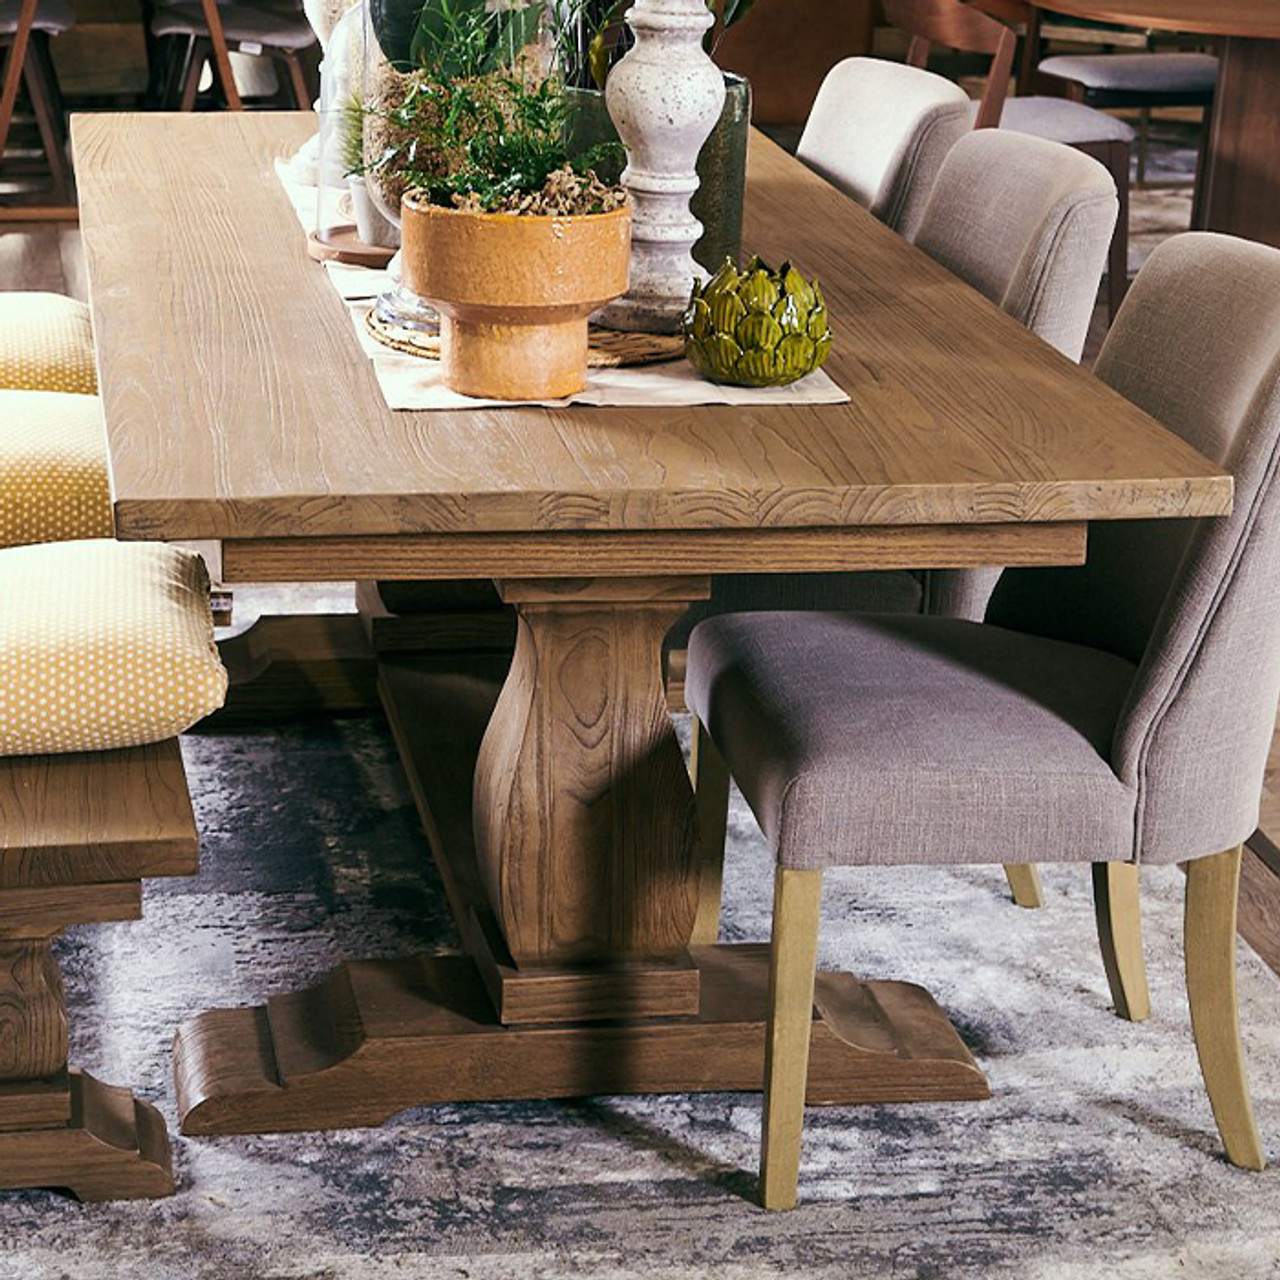 180cm Selene Twin Pod Dining Table – All Rustic Brown